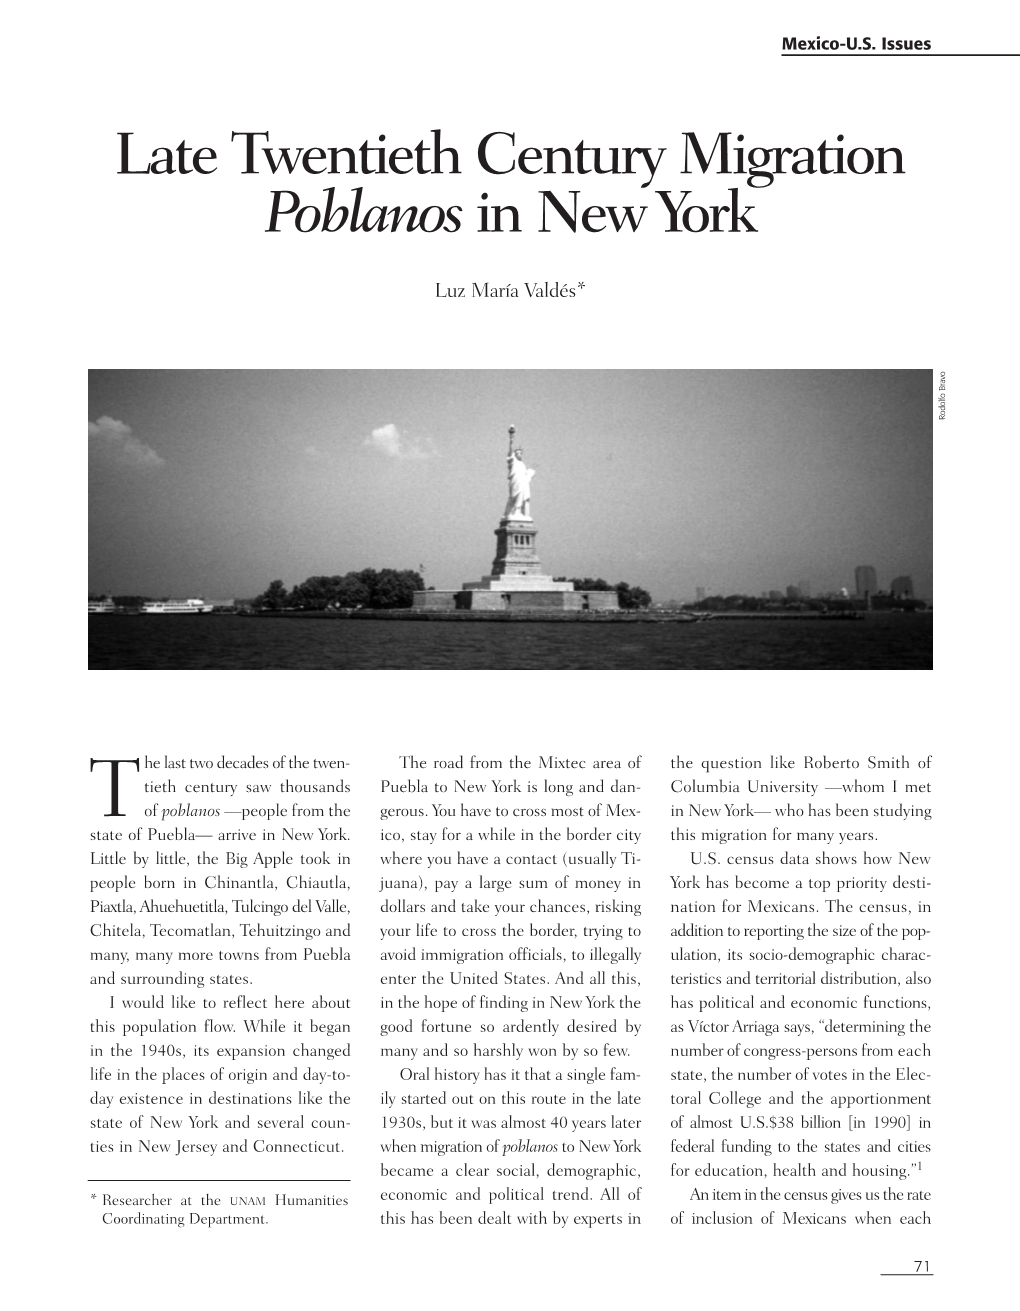 Late Twentieth Century Migration Poblanos in New York